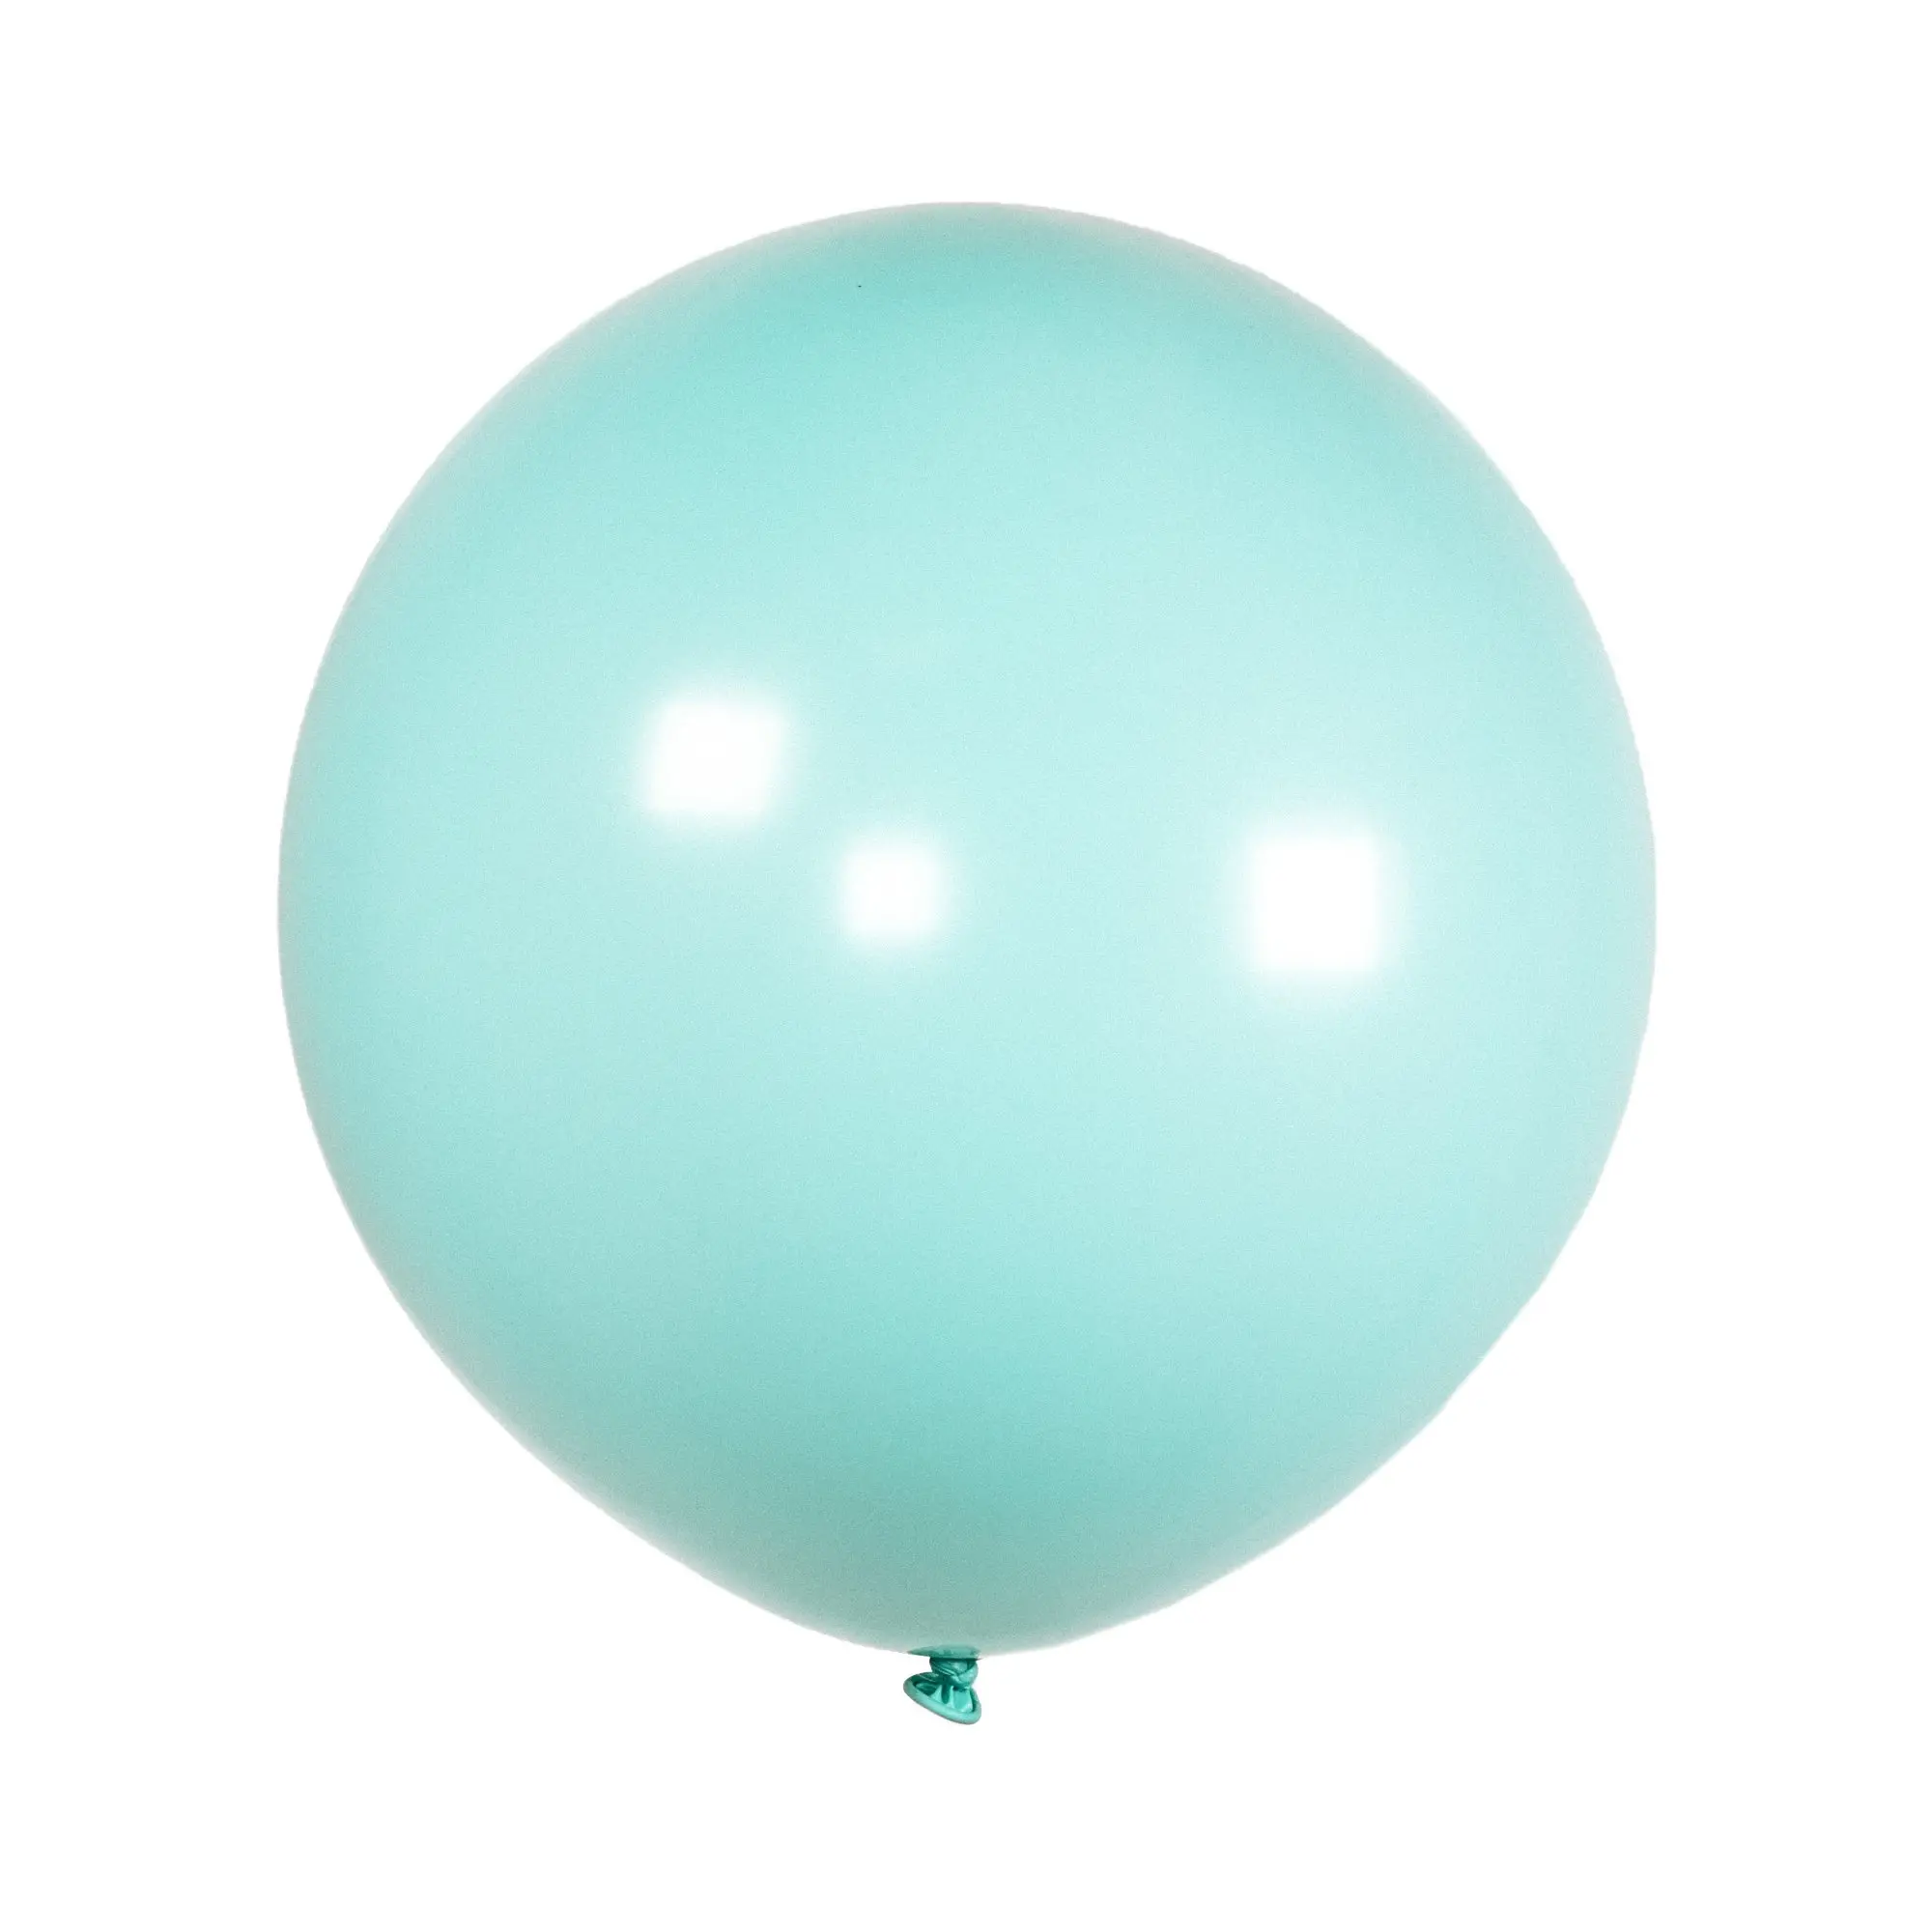 Latex colorful balloon – 48 cm - Tiffany